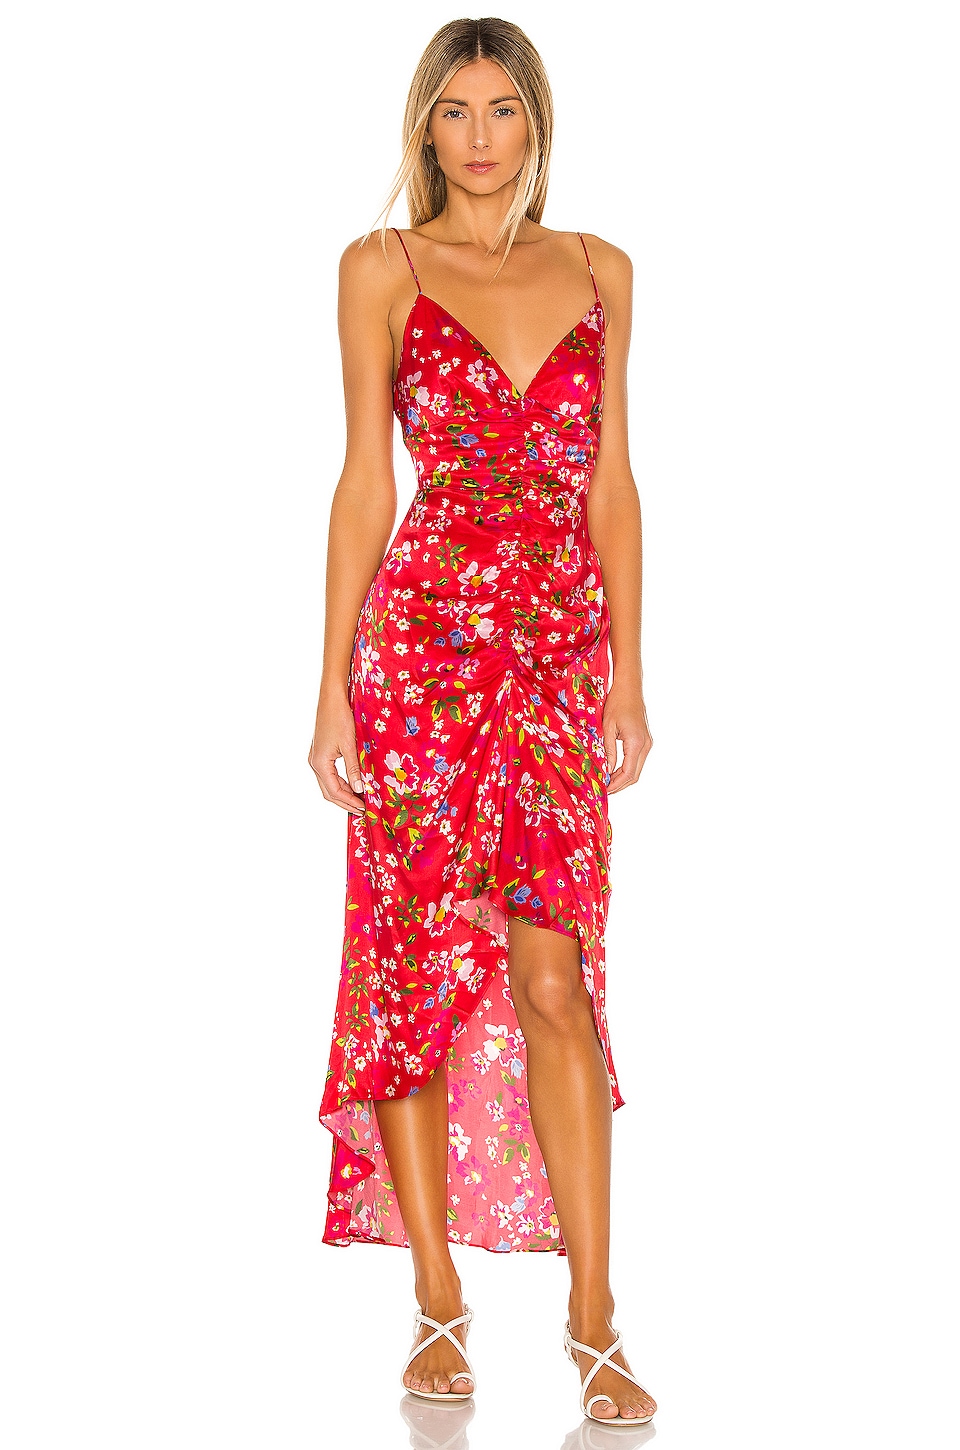 SAU LEE Sofia Dress in Red Floral | REVOLVE